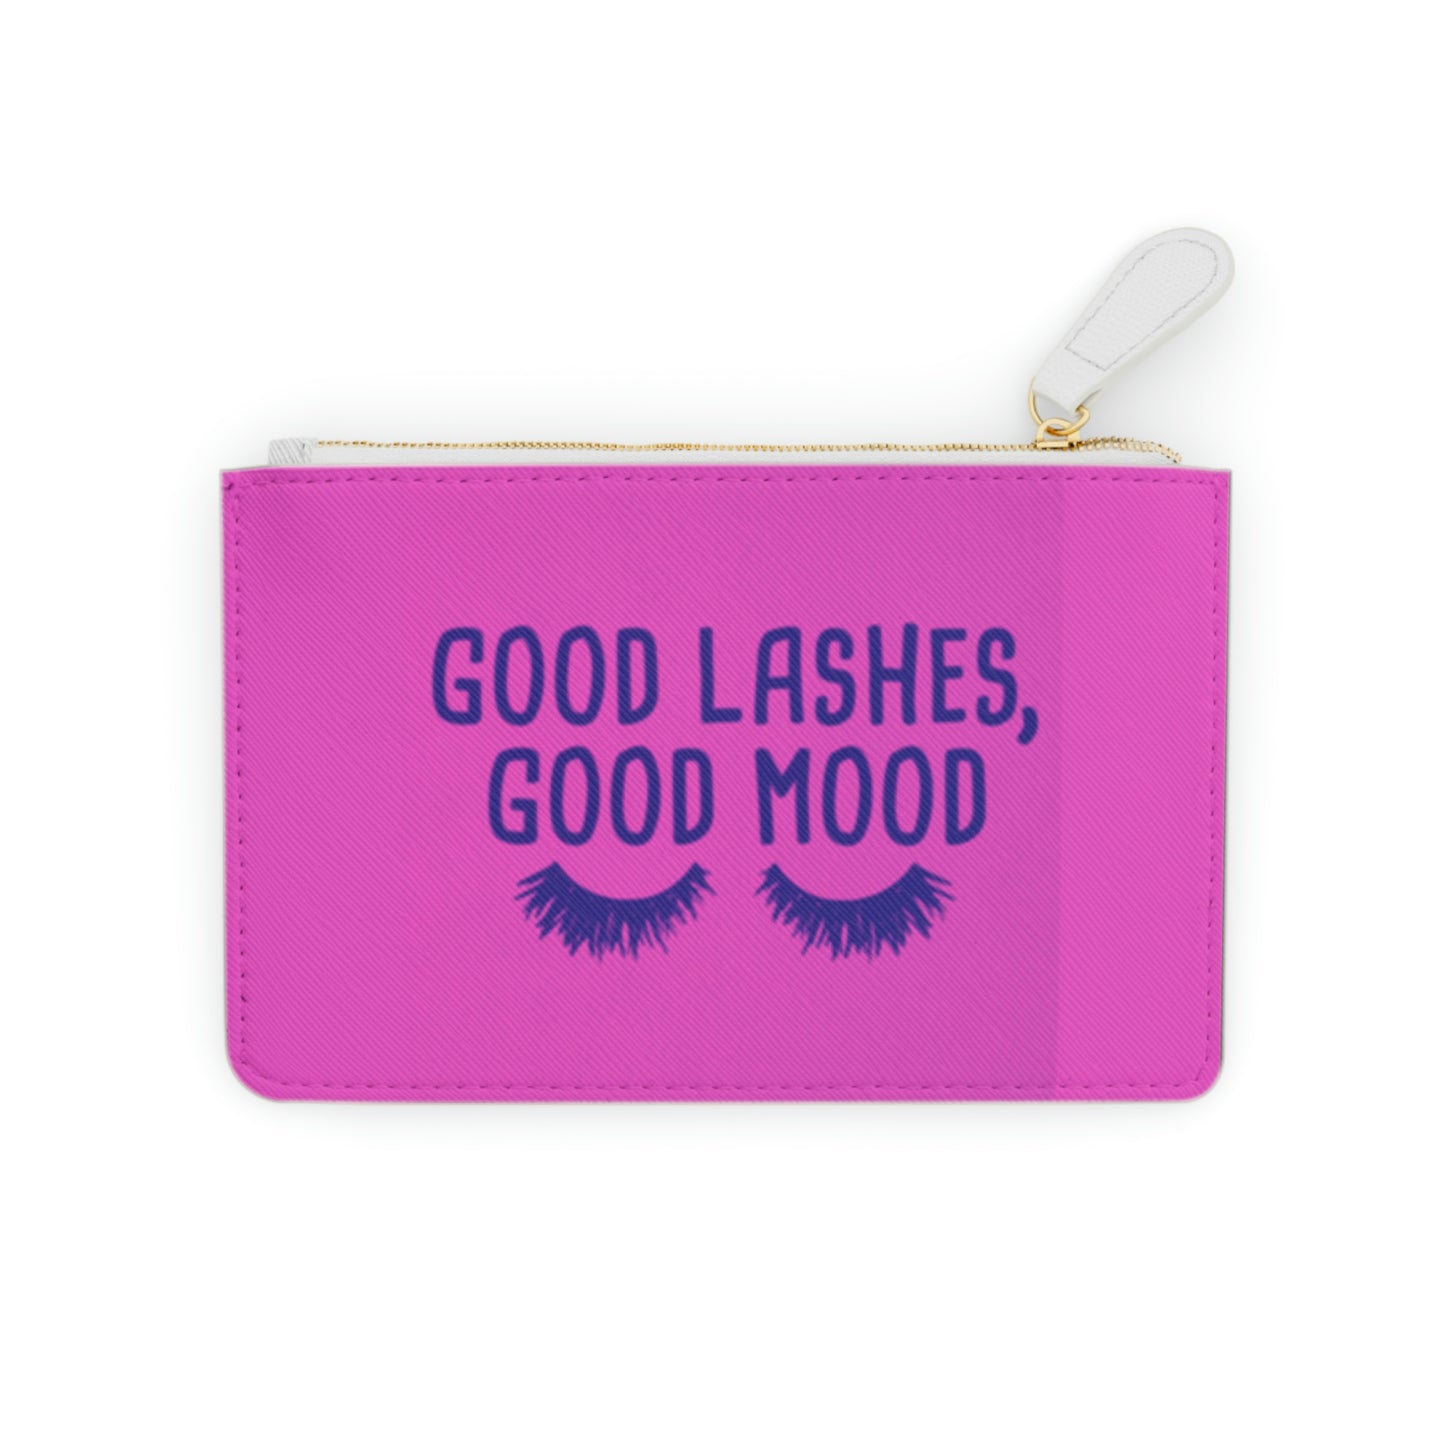 Good Lashes Good Mood